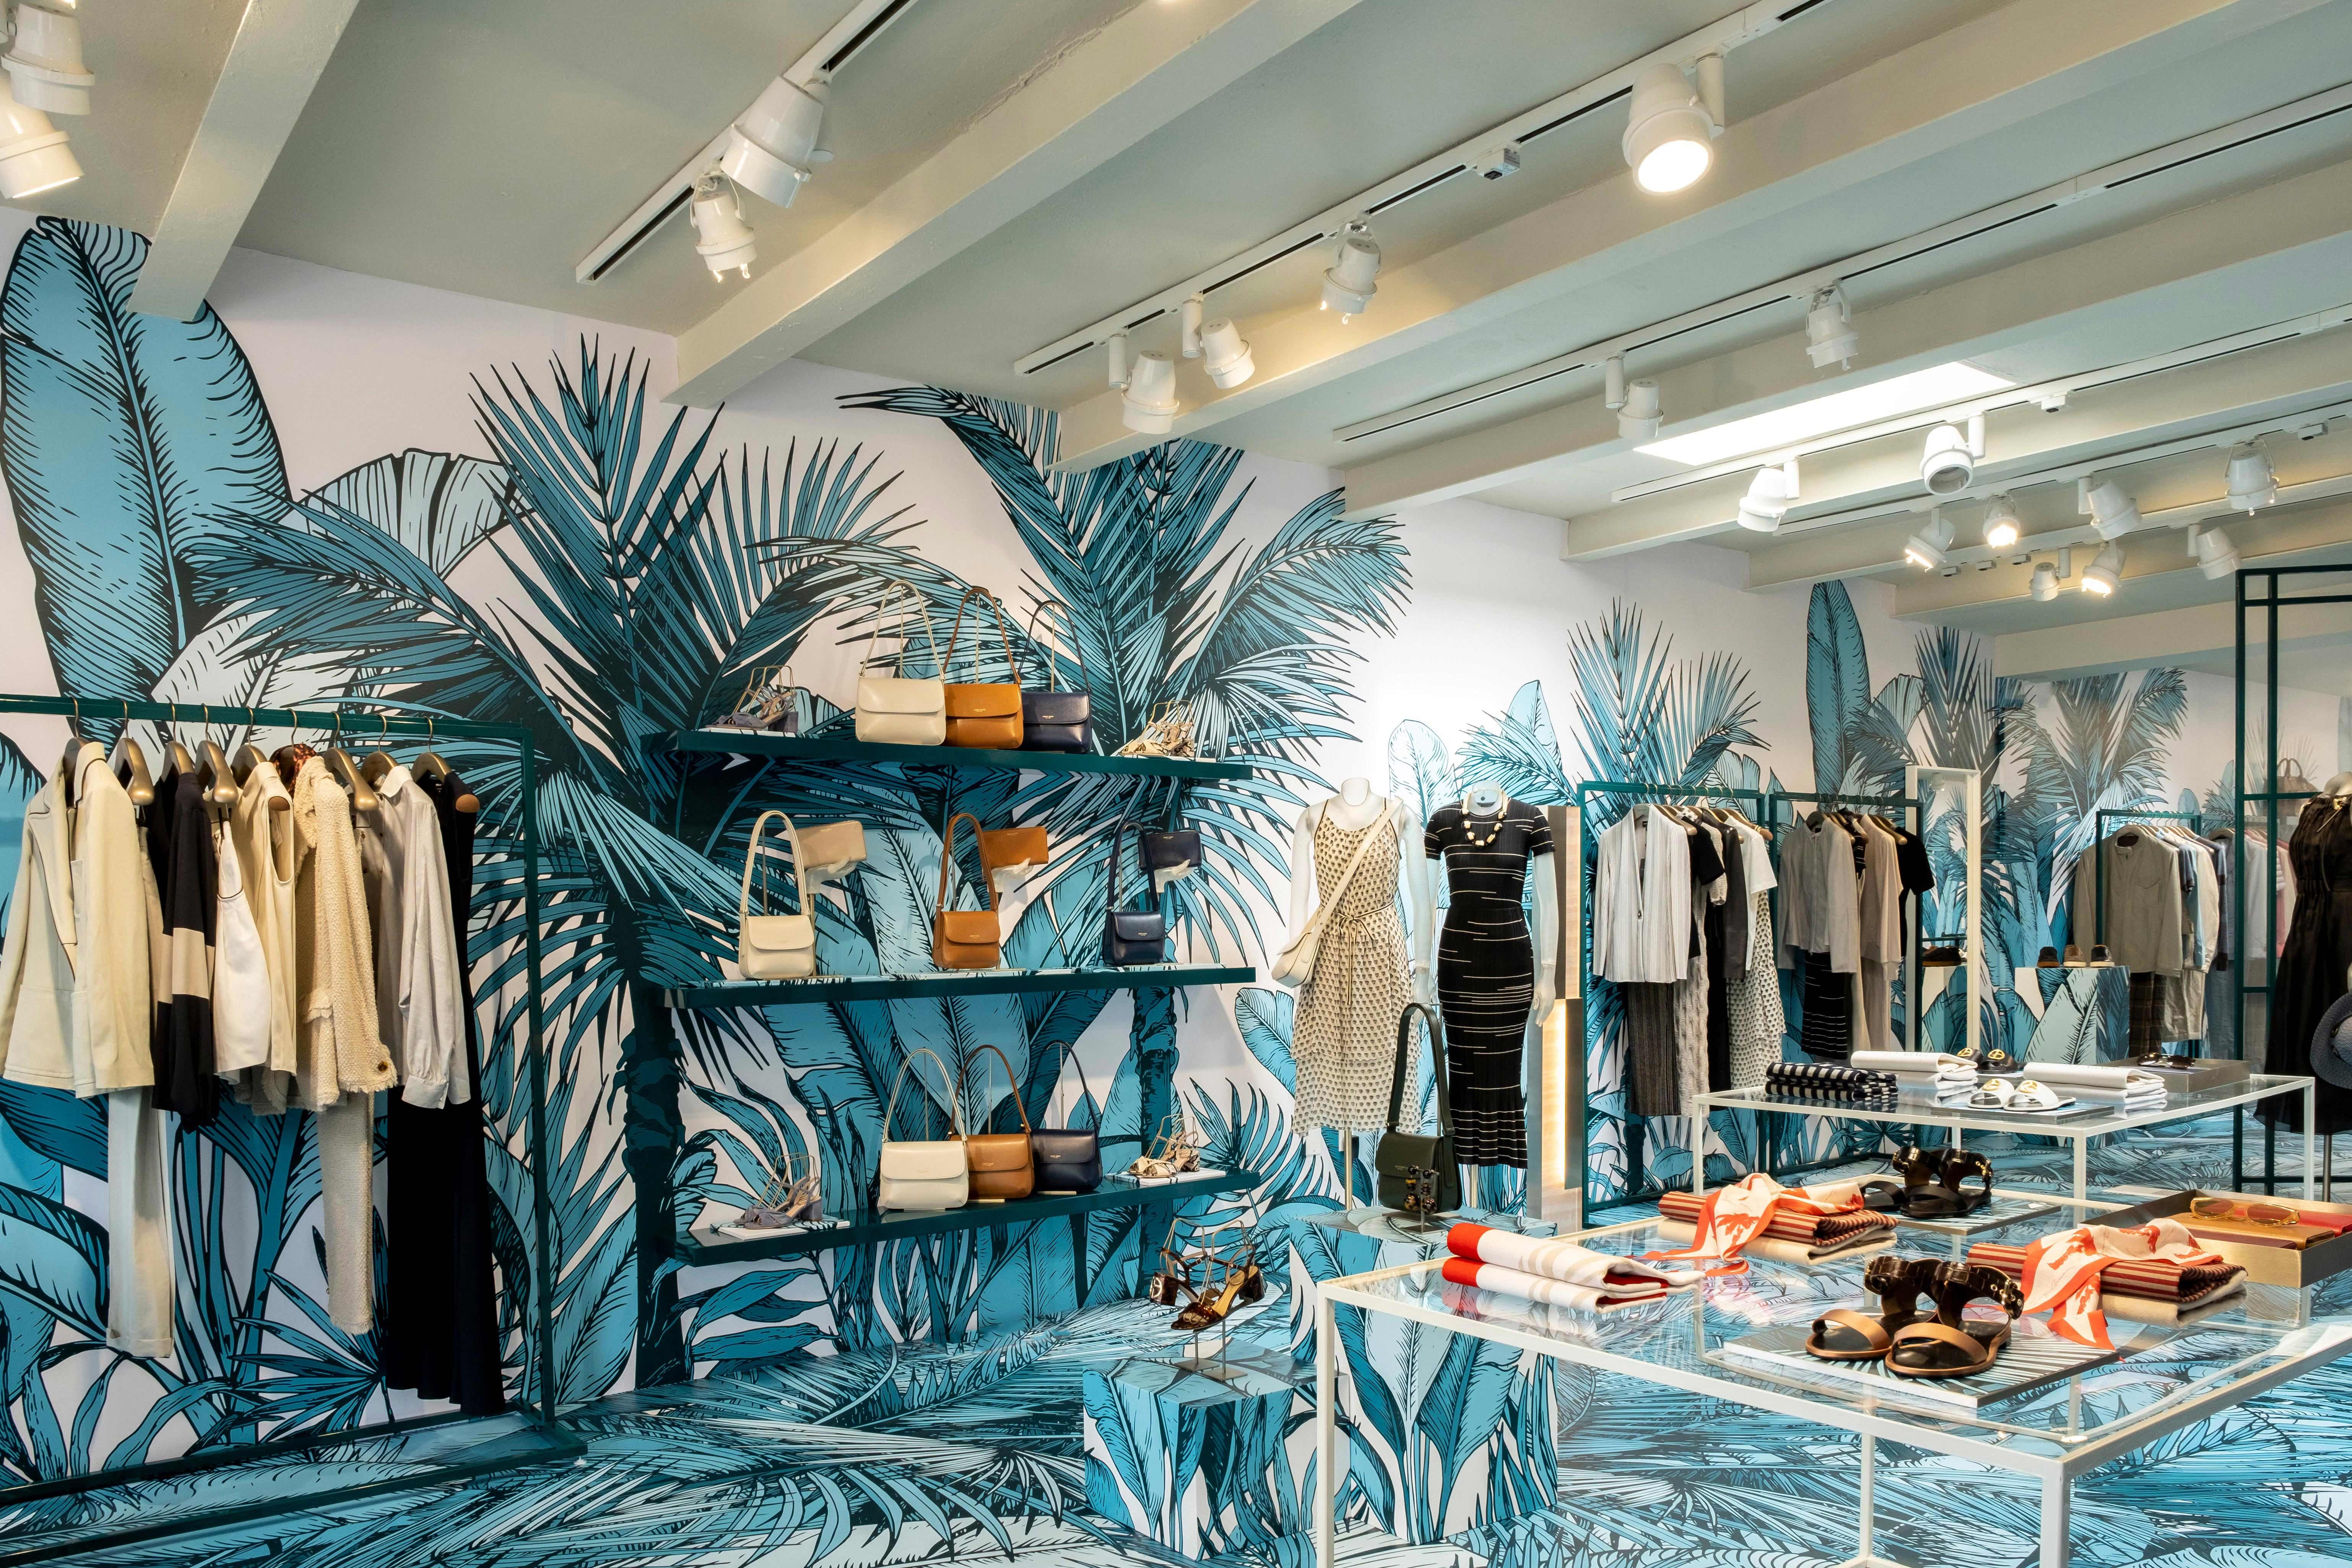 The brand story of Giorgio Armani - Luxury Fashion House